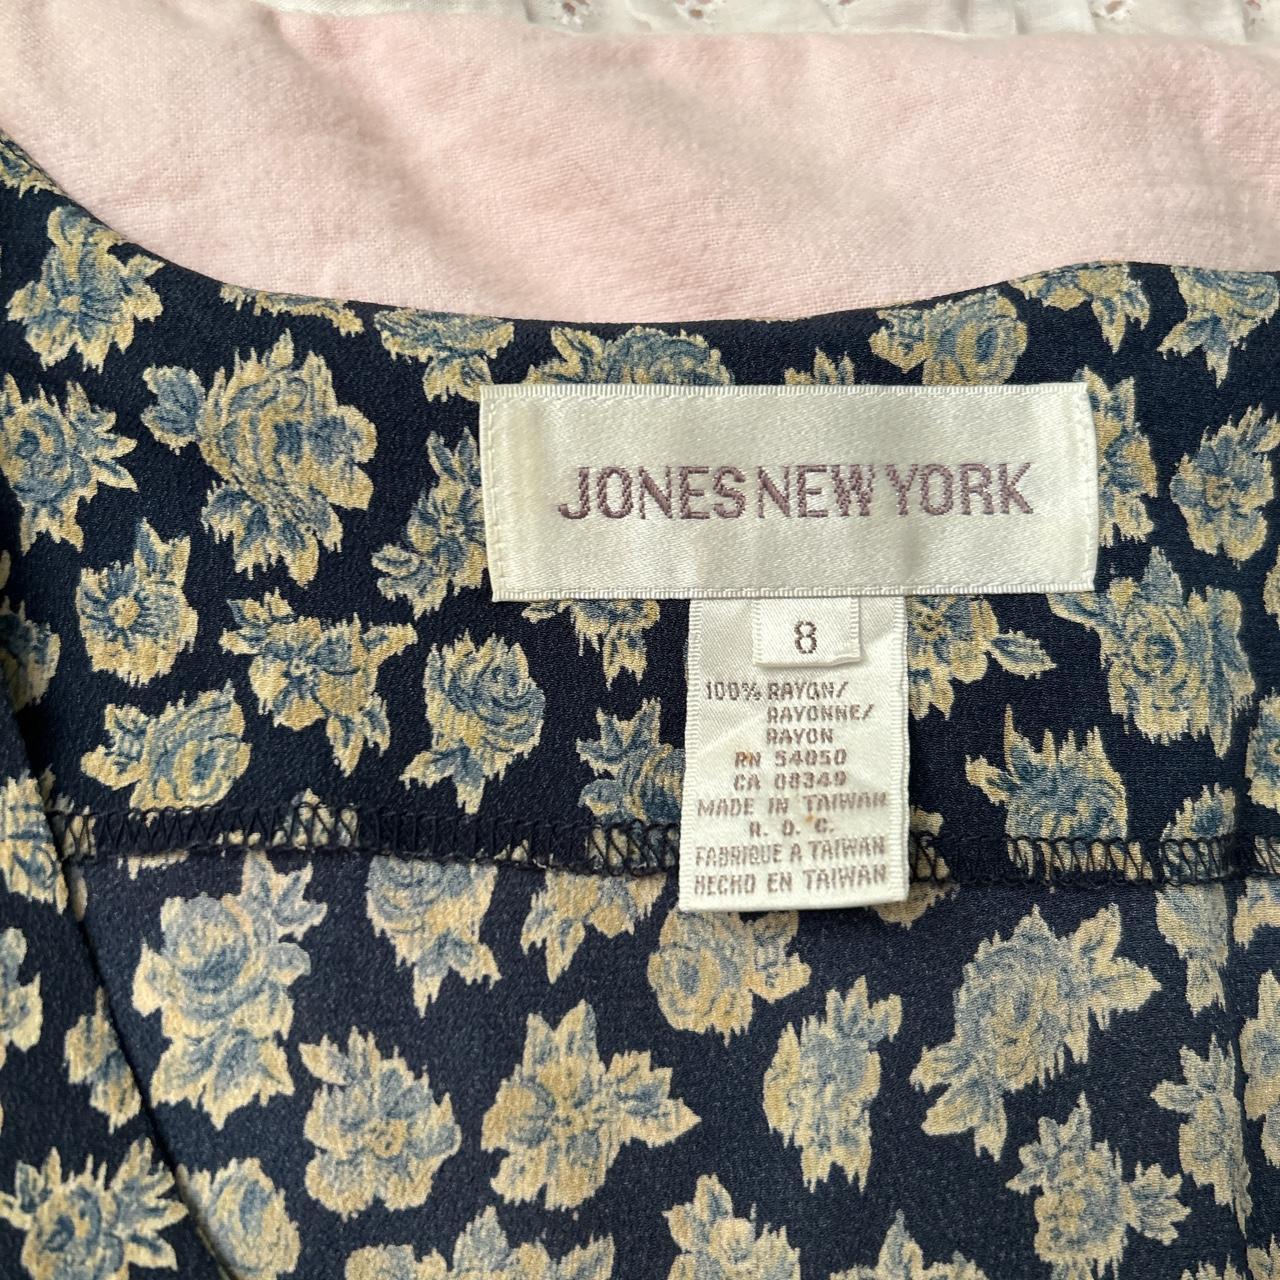 Jones New York Floral Dress Button up midi length... - Depop